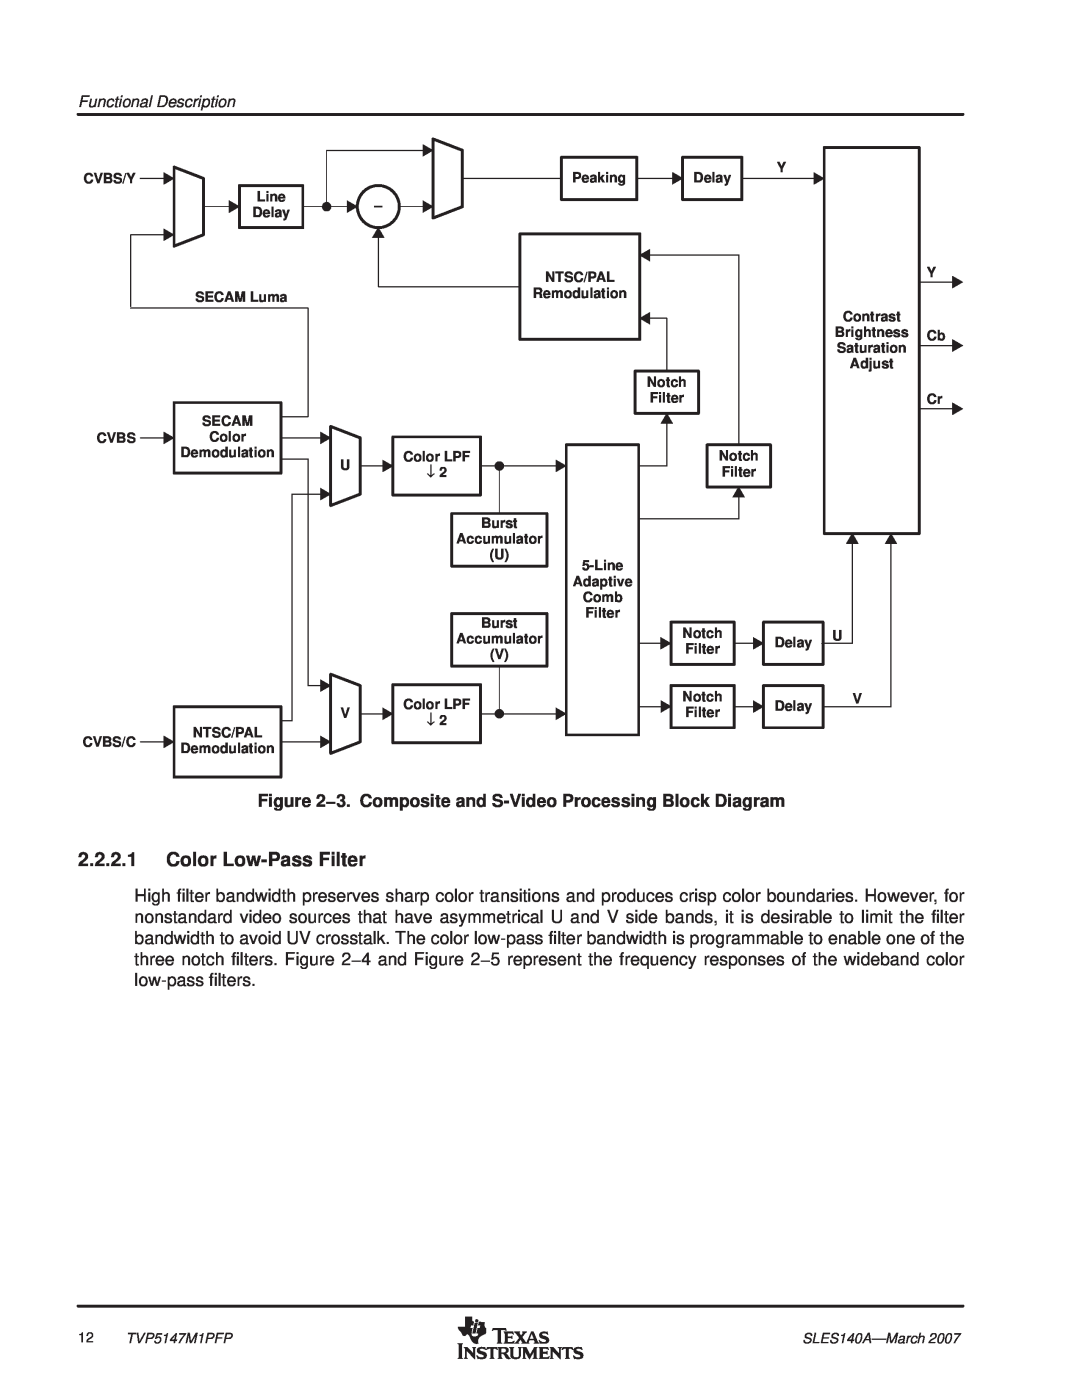 Texas Instruments TVP5147M1PFP manual Color Low-Pass Filter, 3. Composite and S-Video Processing Block Diagram 